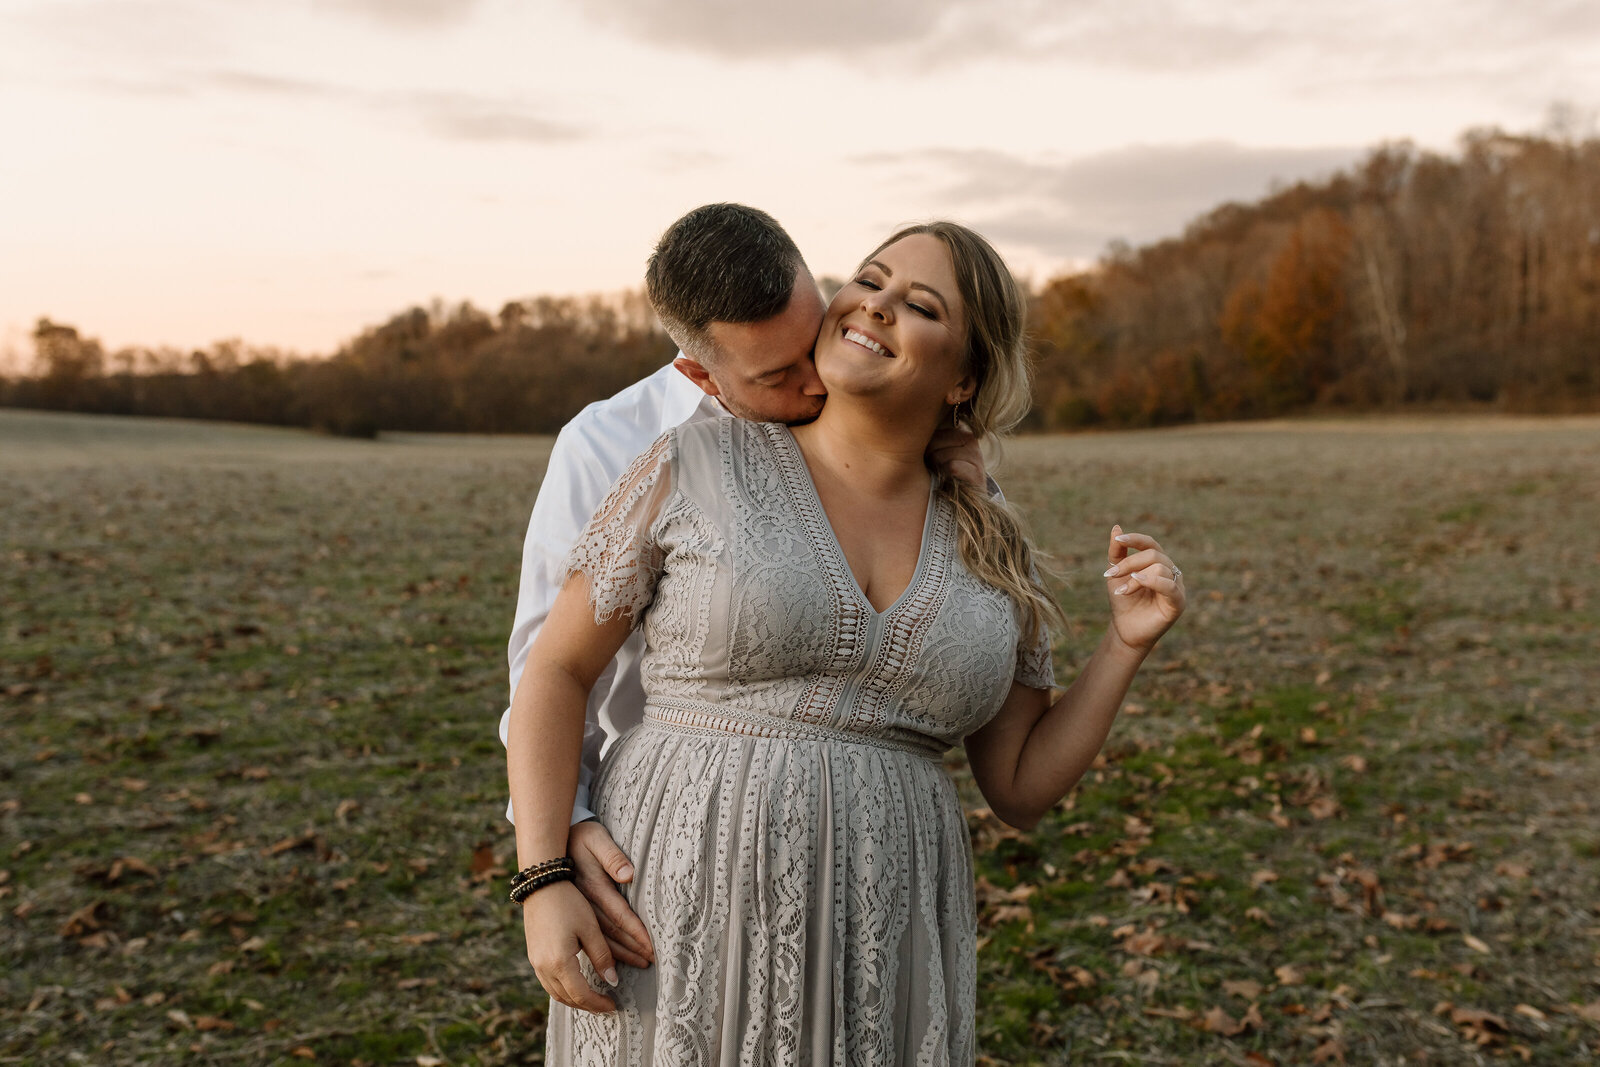 Christin Sofka Photography - Engagement Session Photographer - Nashville Tennessee